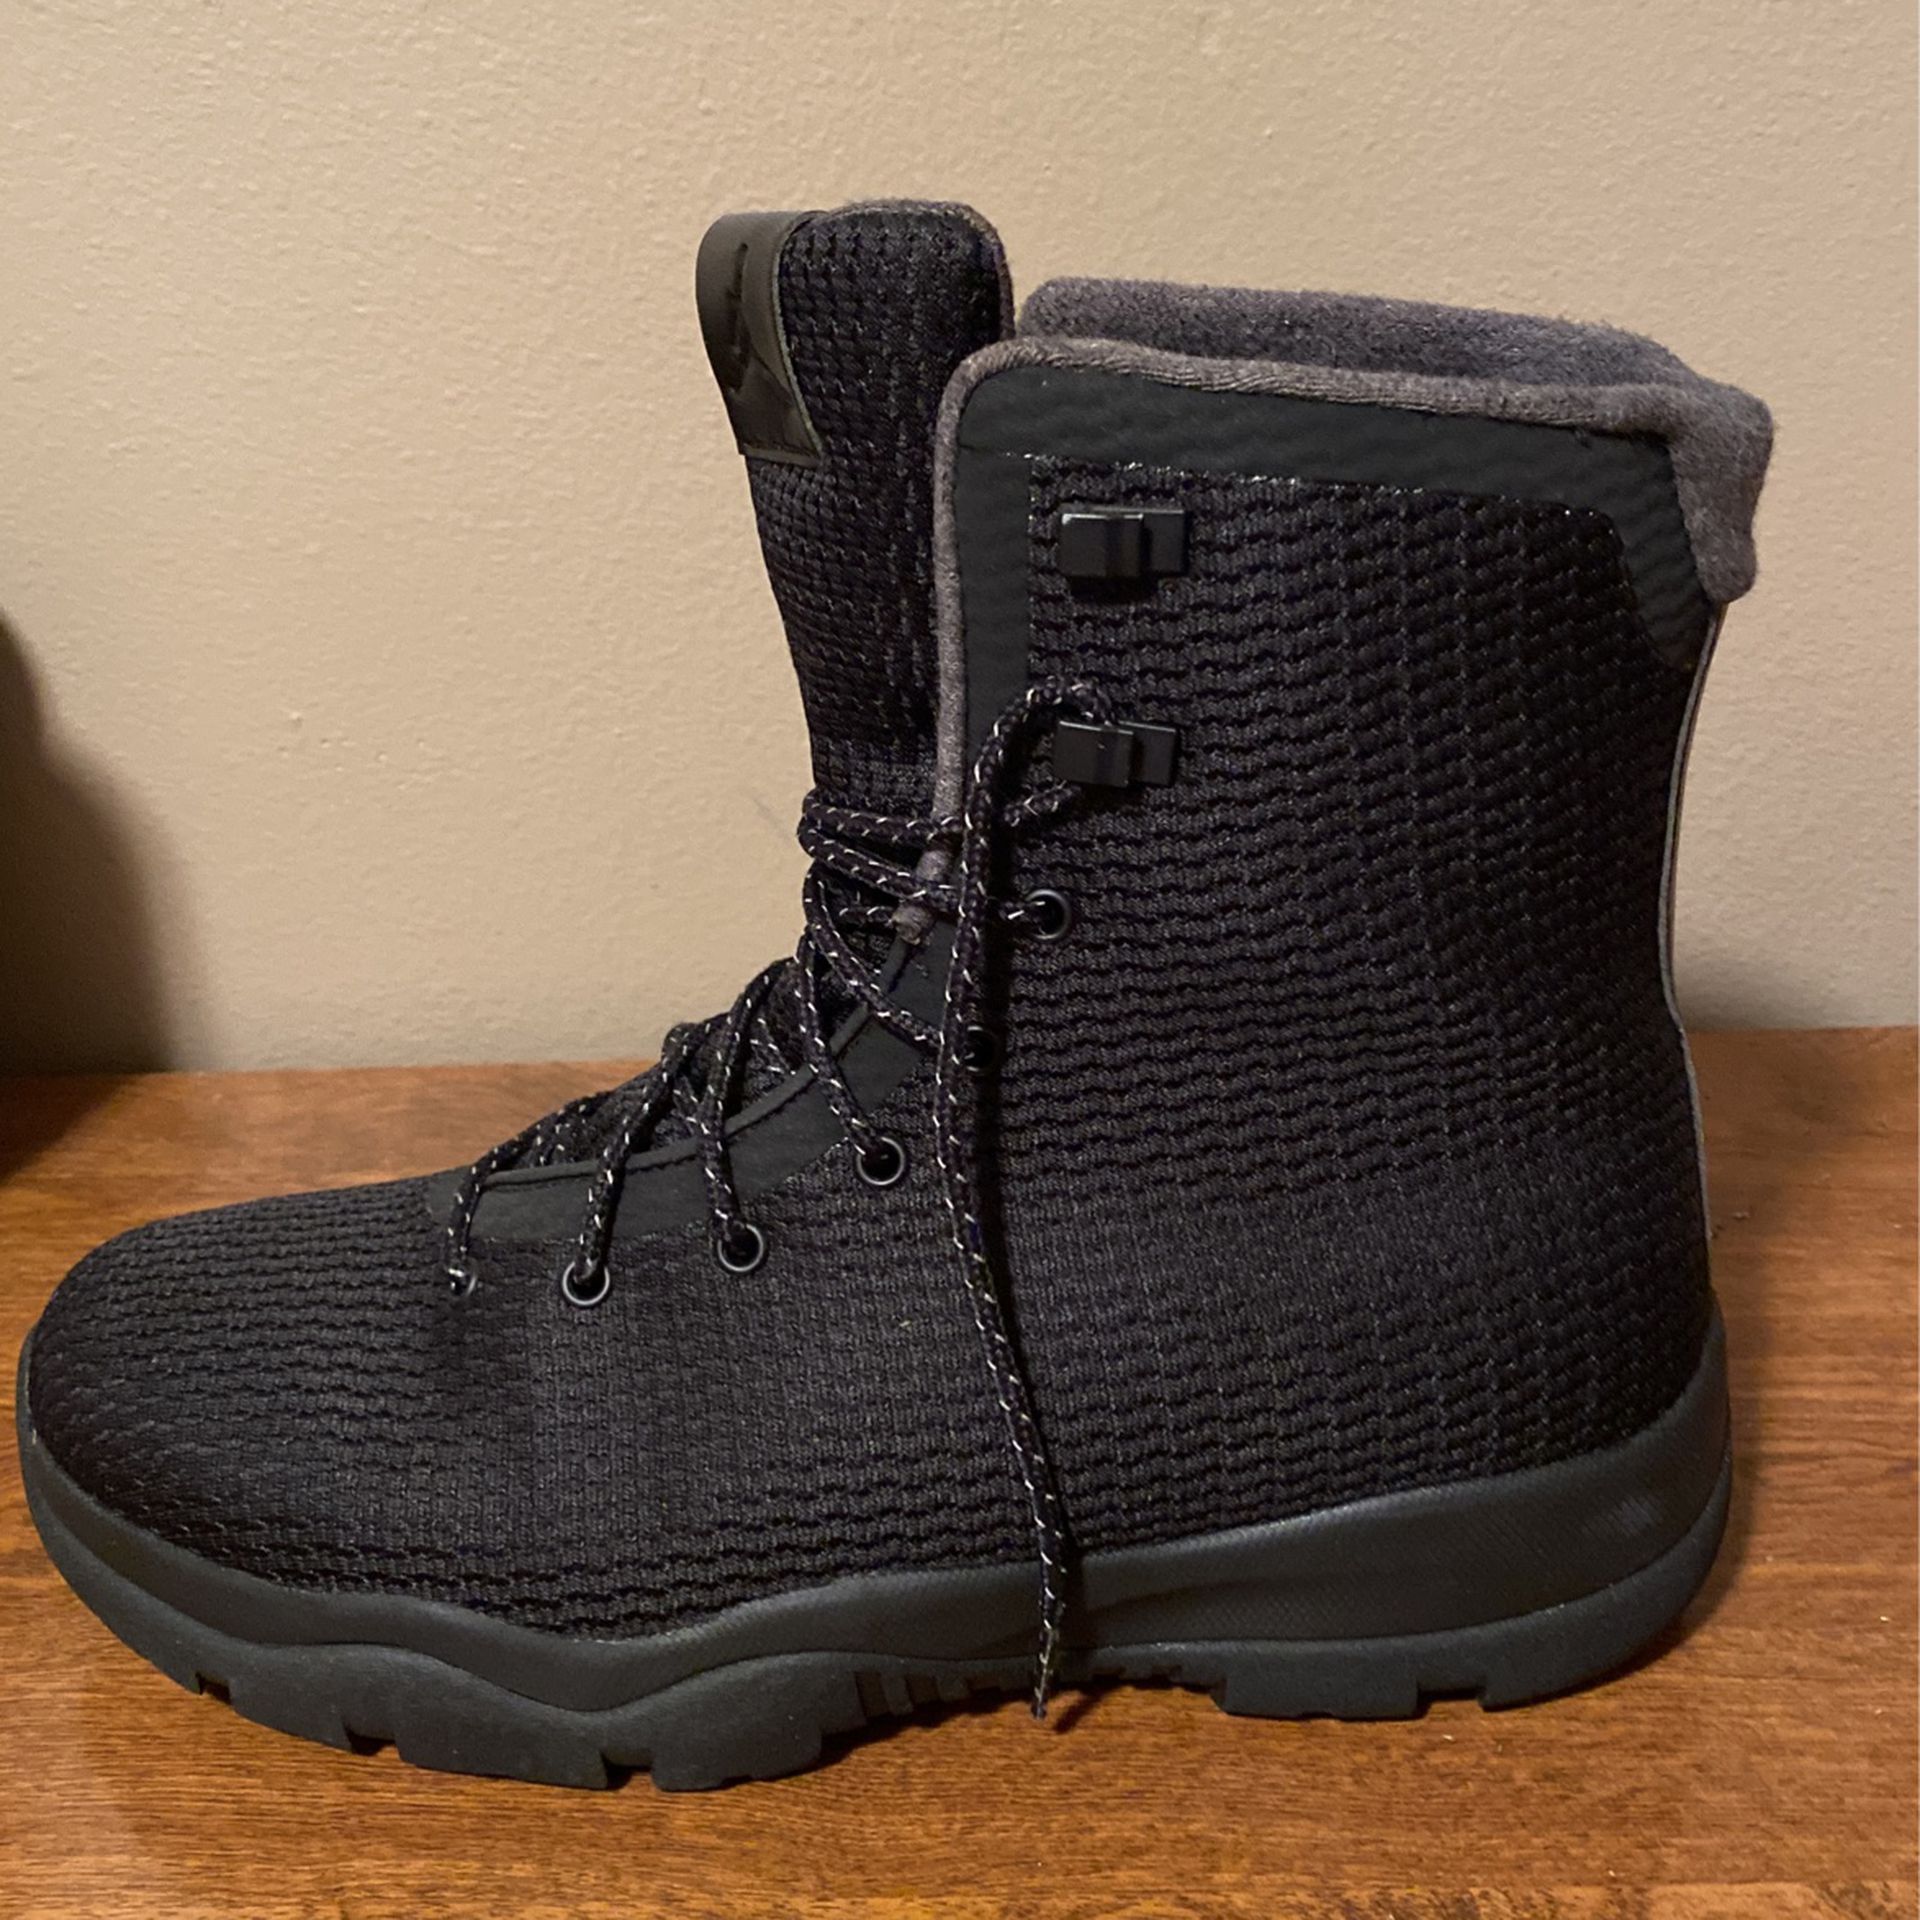 Jordan Future Boots (Black)